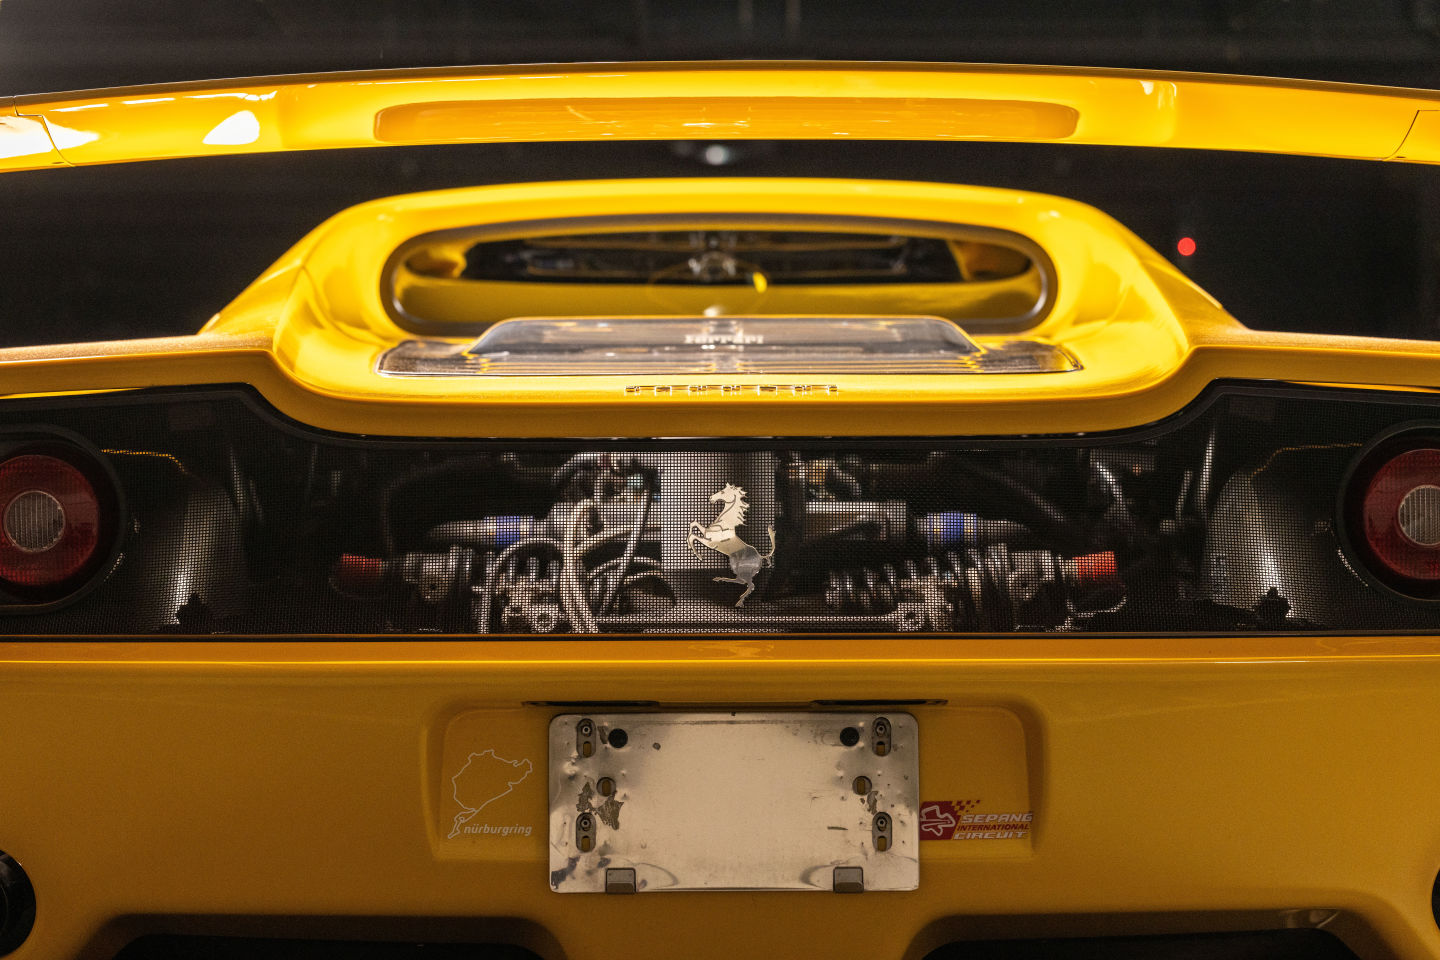 vue arrière d'une Ferrari F50 jaune